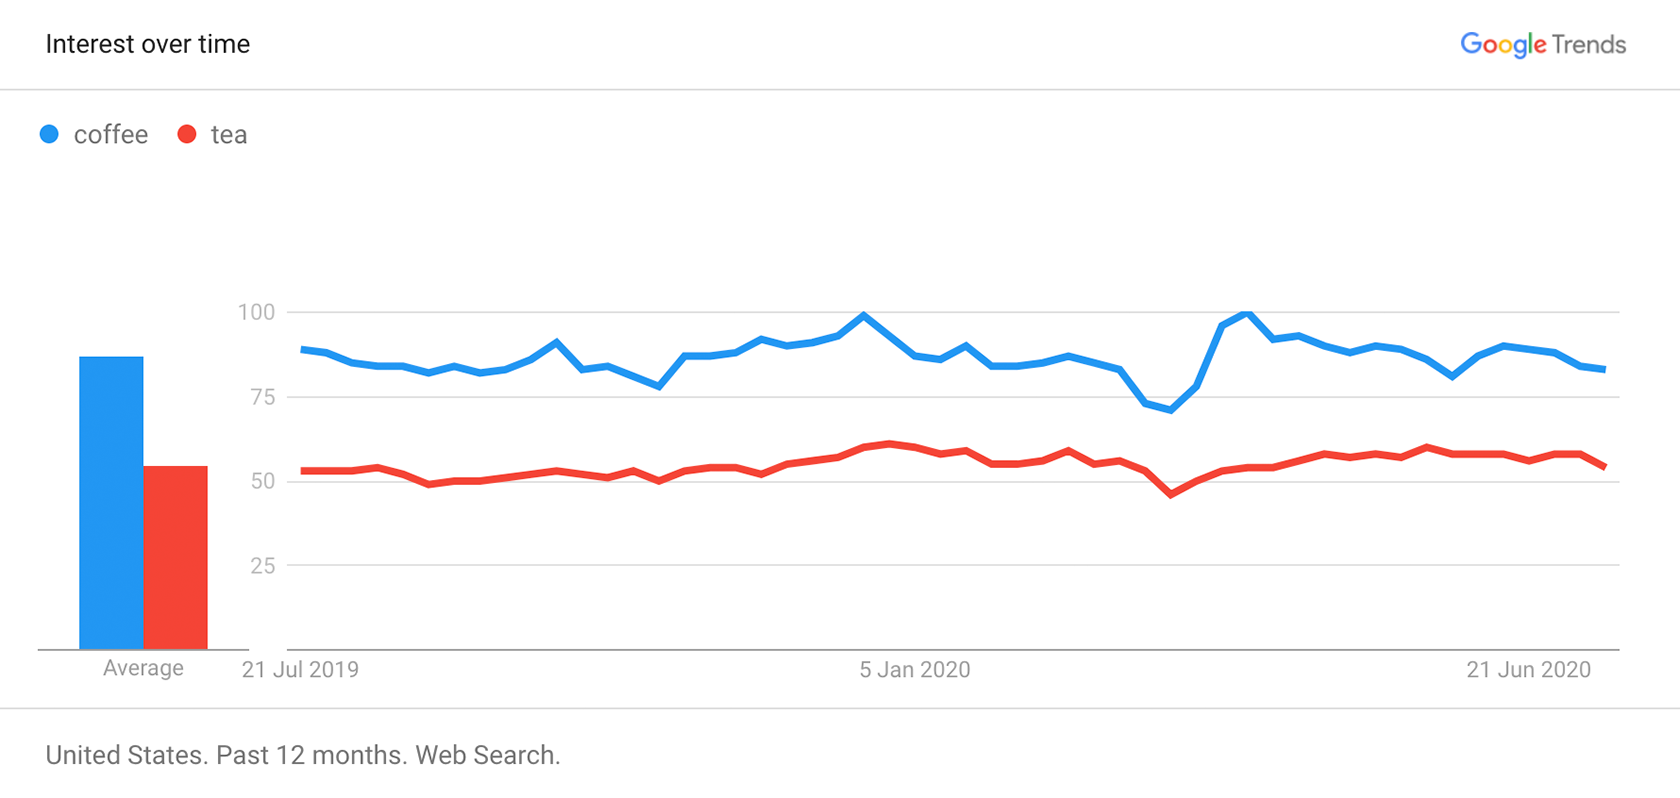 Google Trends - coffee vs tea interest over time